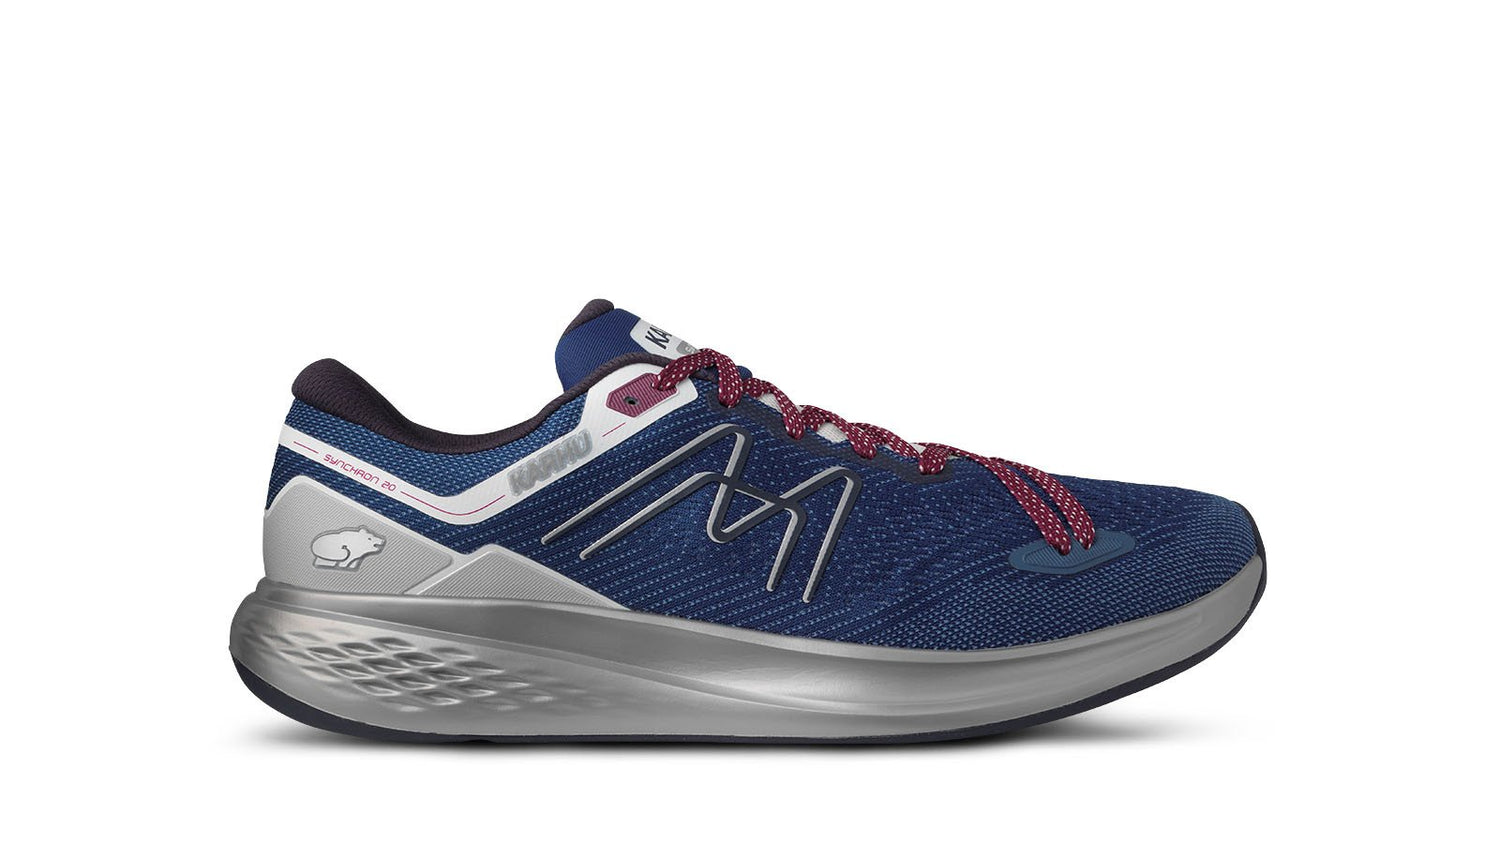 KARHU men's Synchron 2.0 F103002 blue running shoe